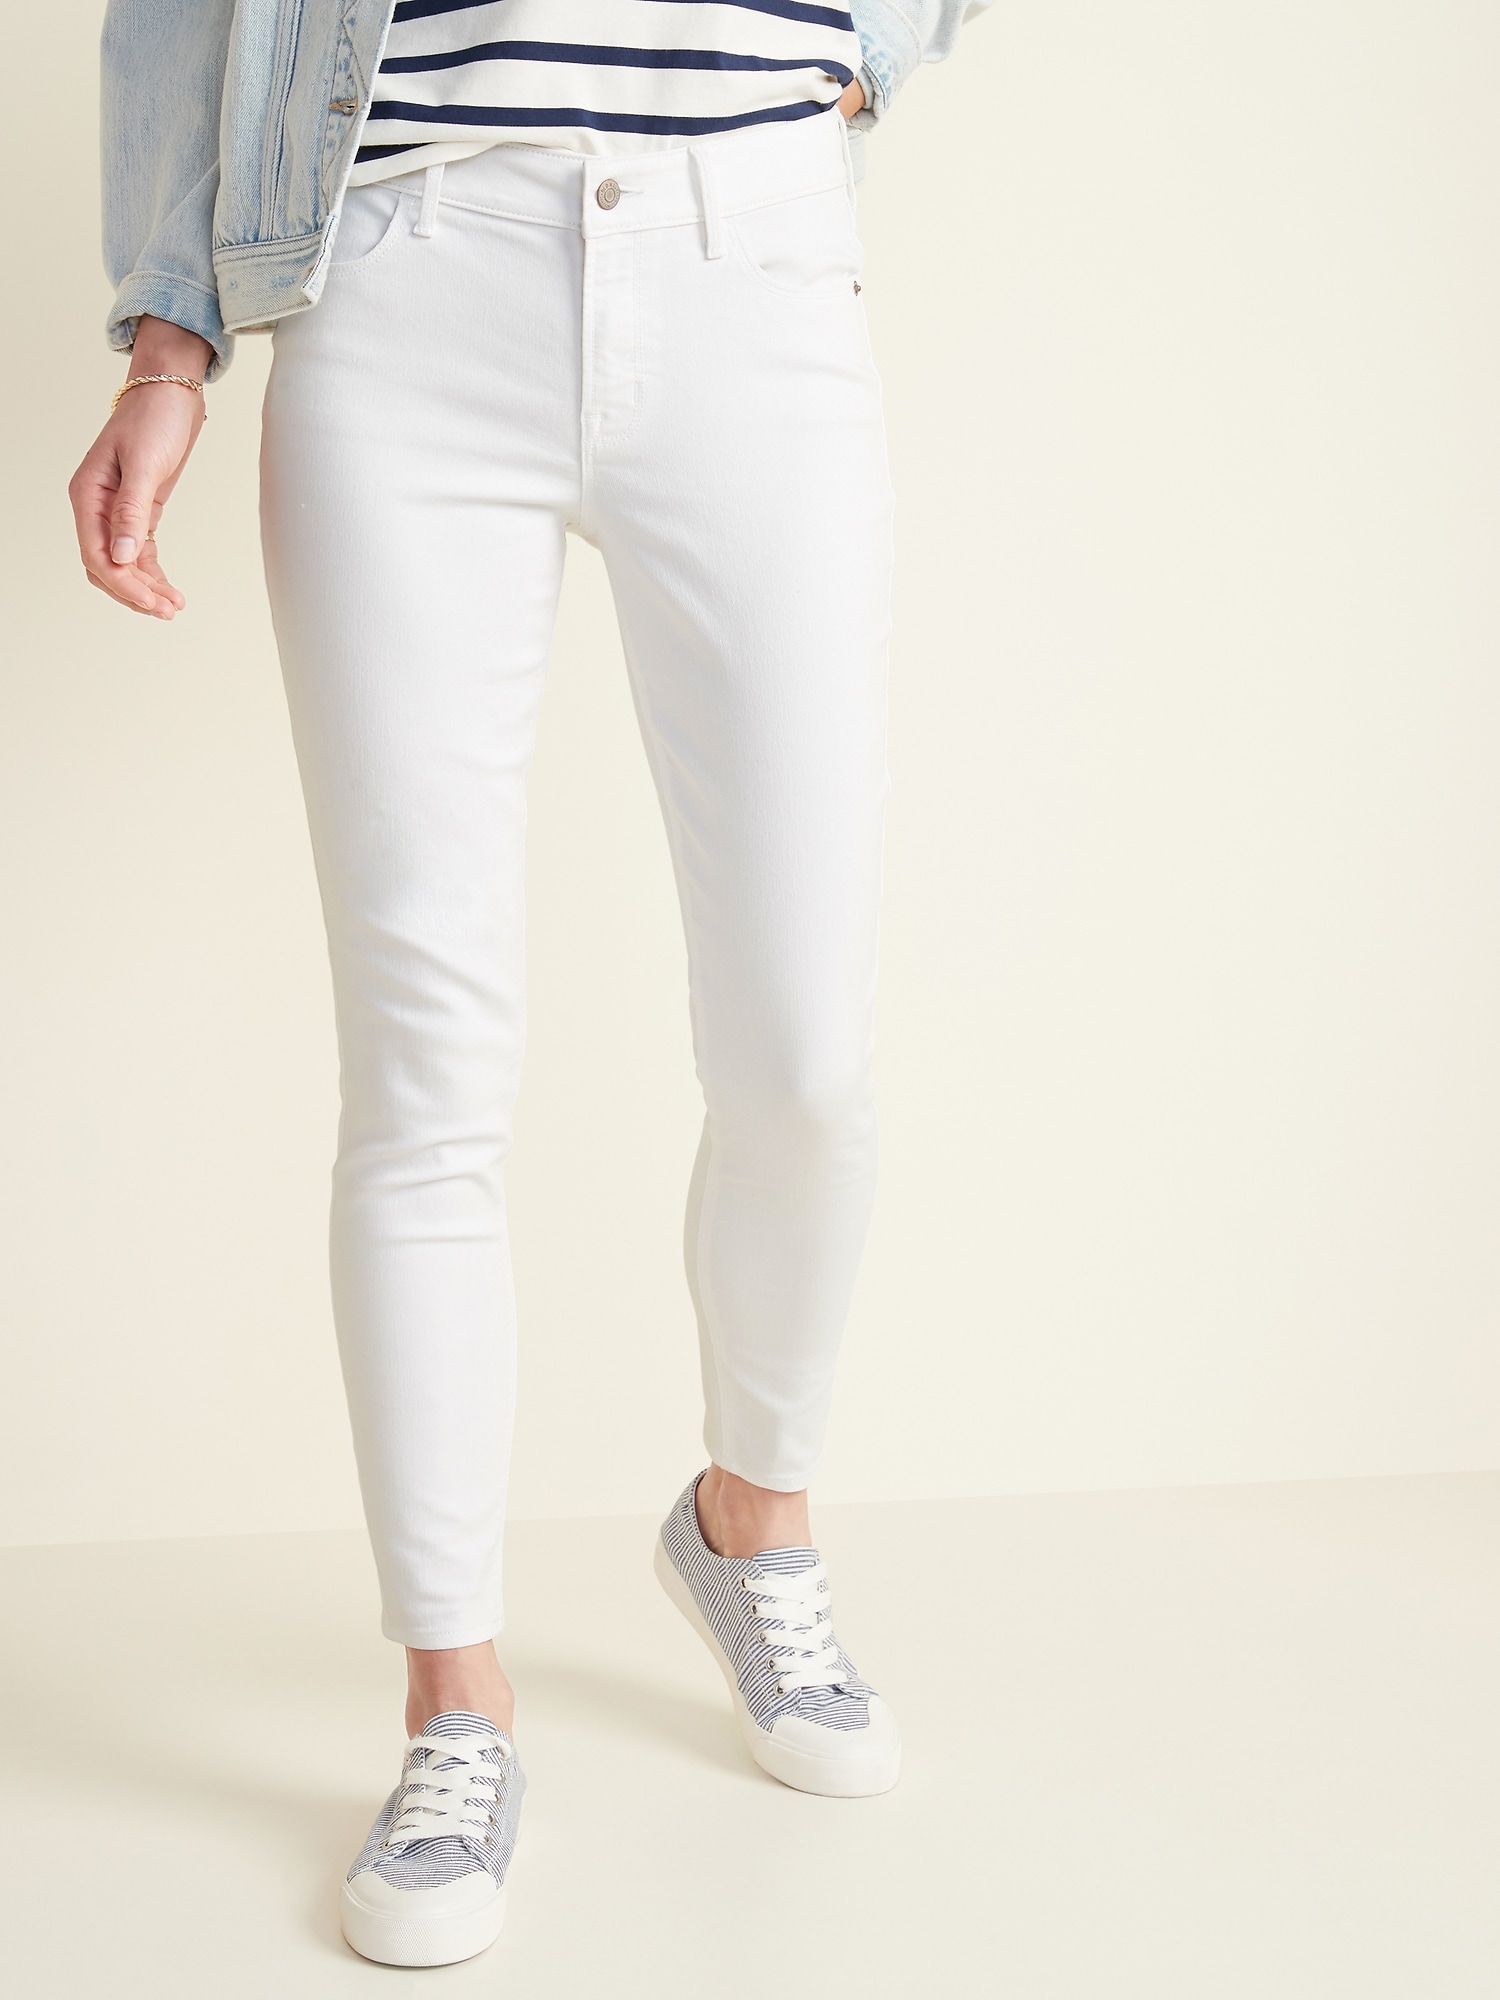 white super skinny jeans